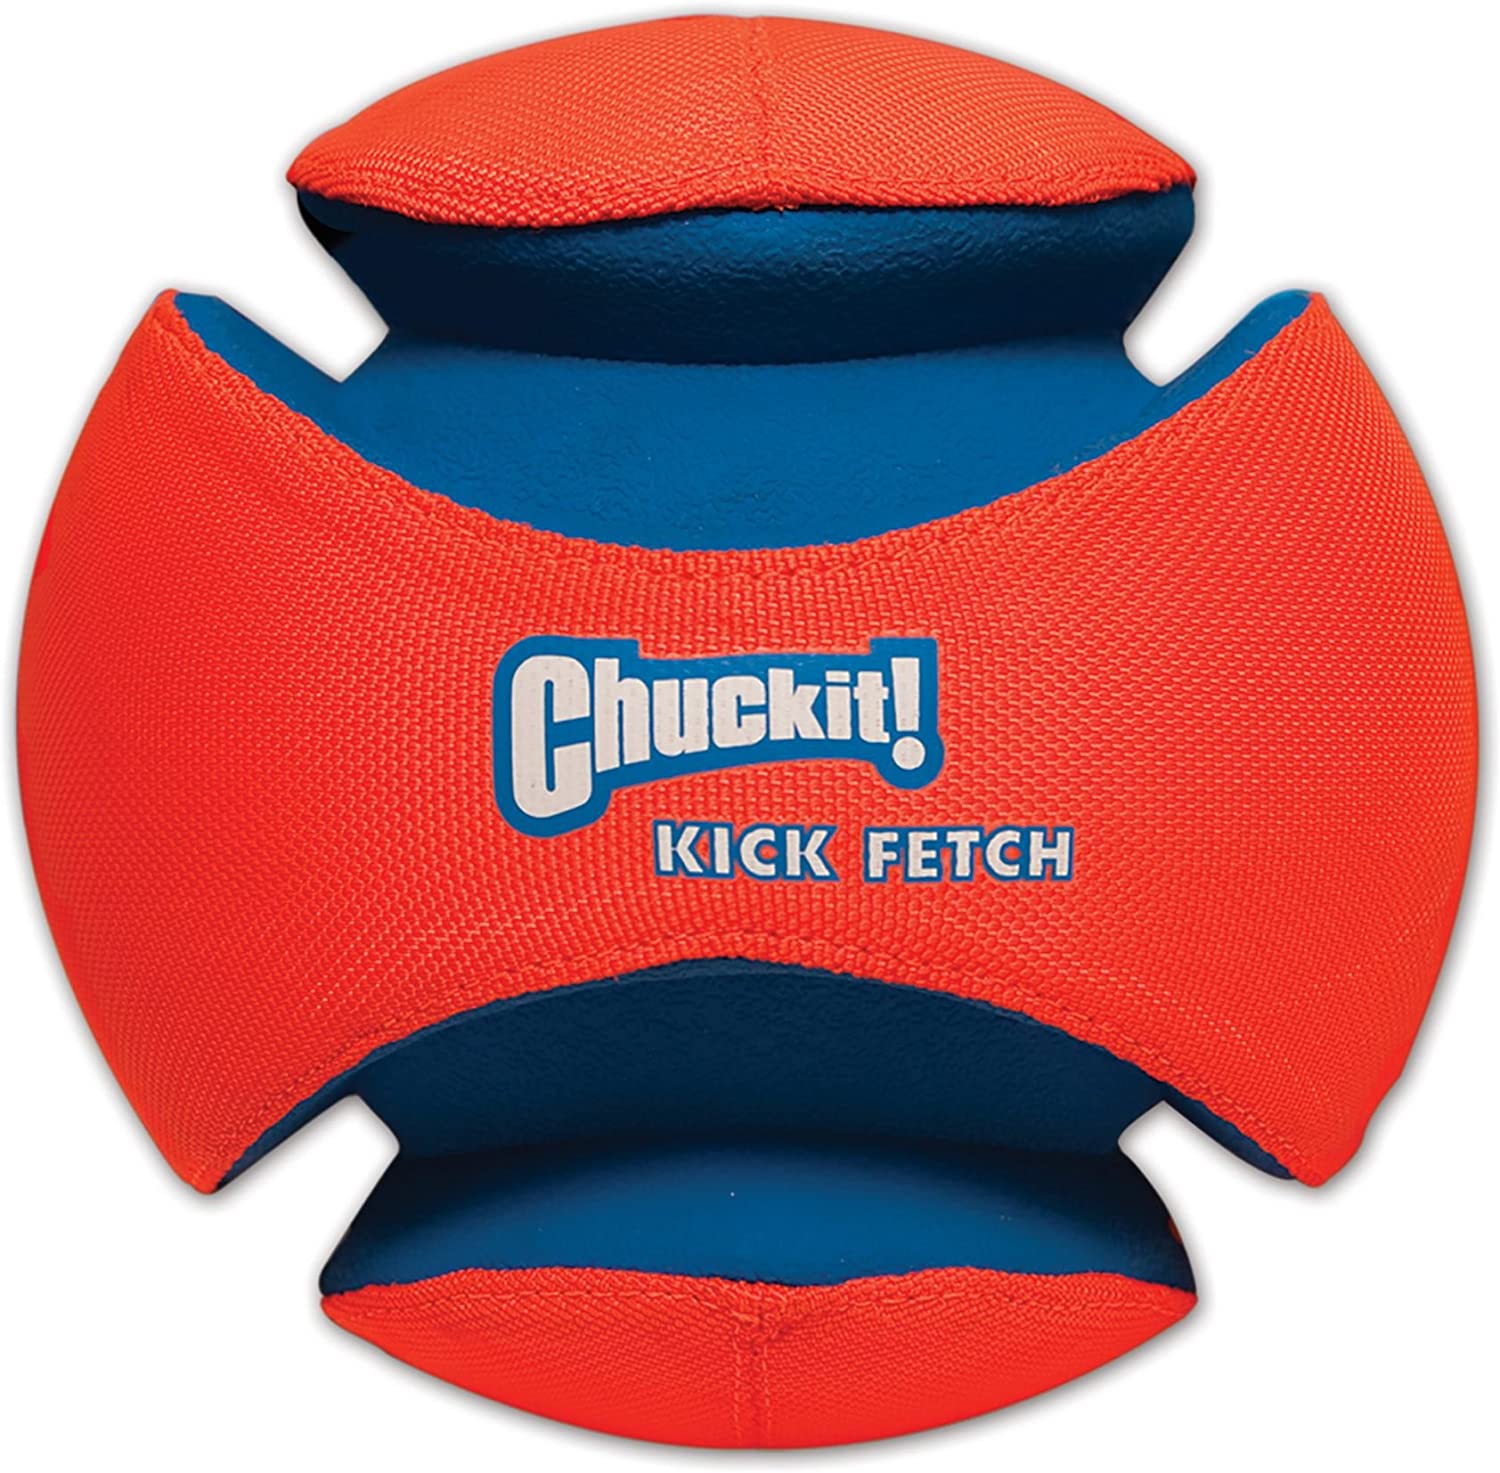  Chuckit! 251201 Kick Fetch Balón de Fútbol para Perros, L 